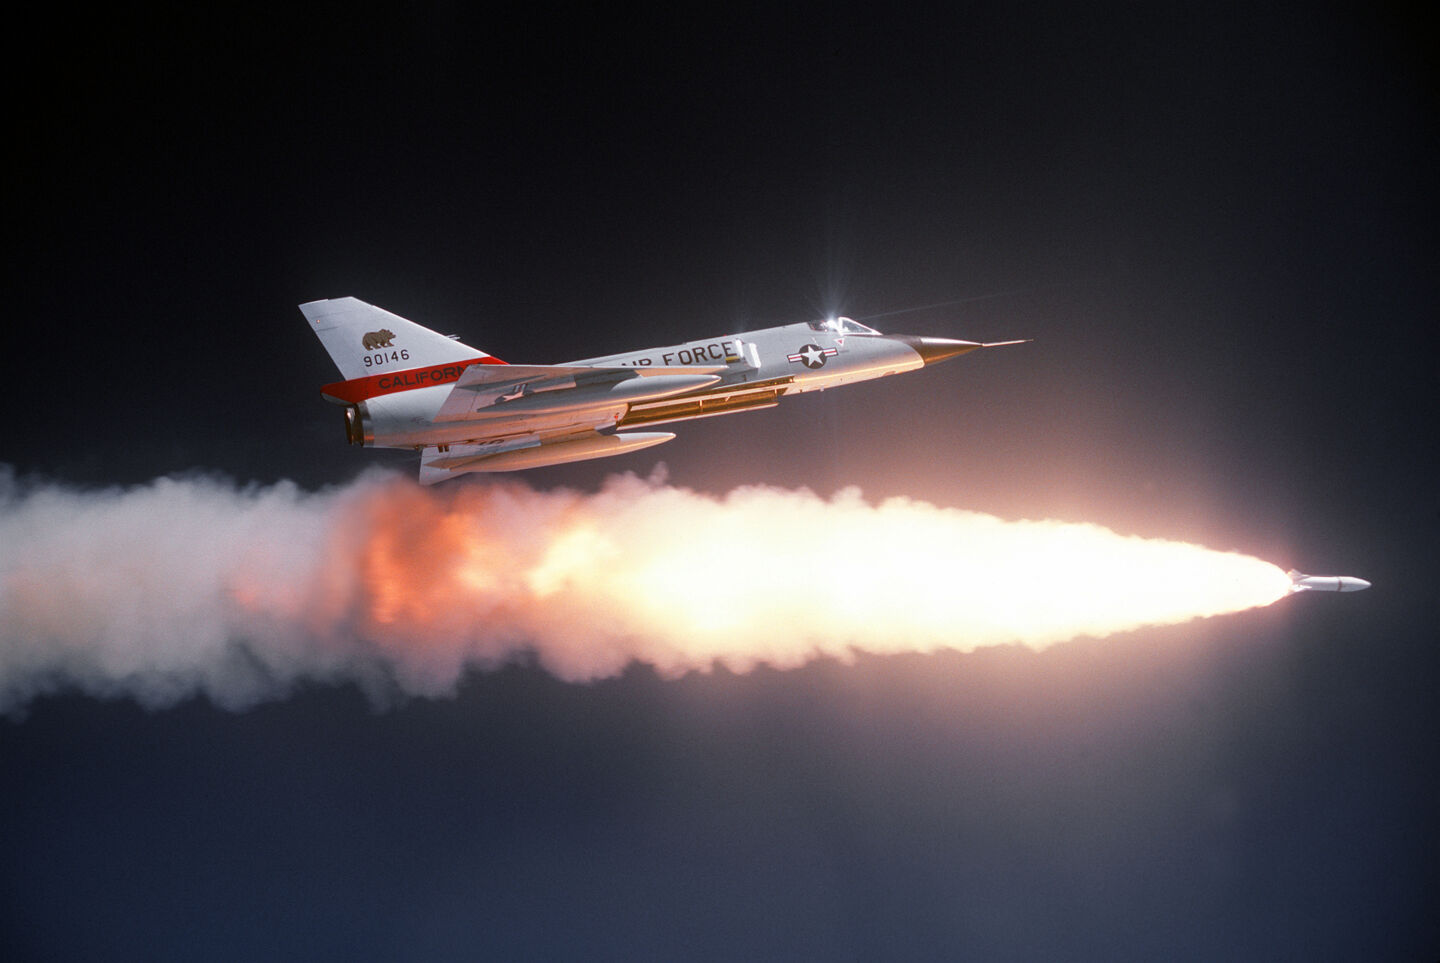 F-106-Firing-Genie-Missile-1440x963.jpg